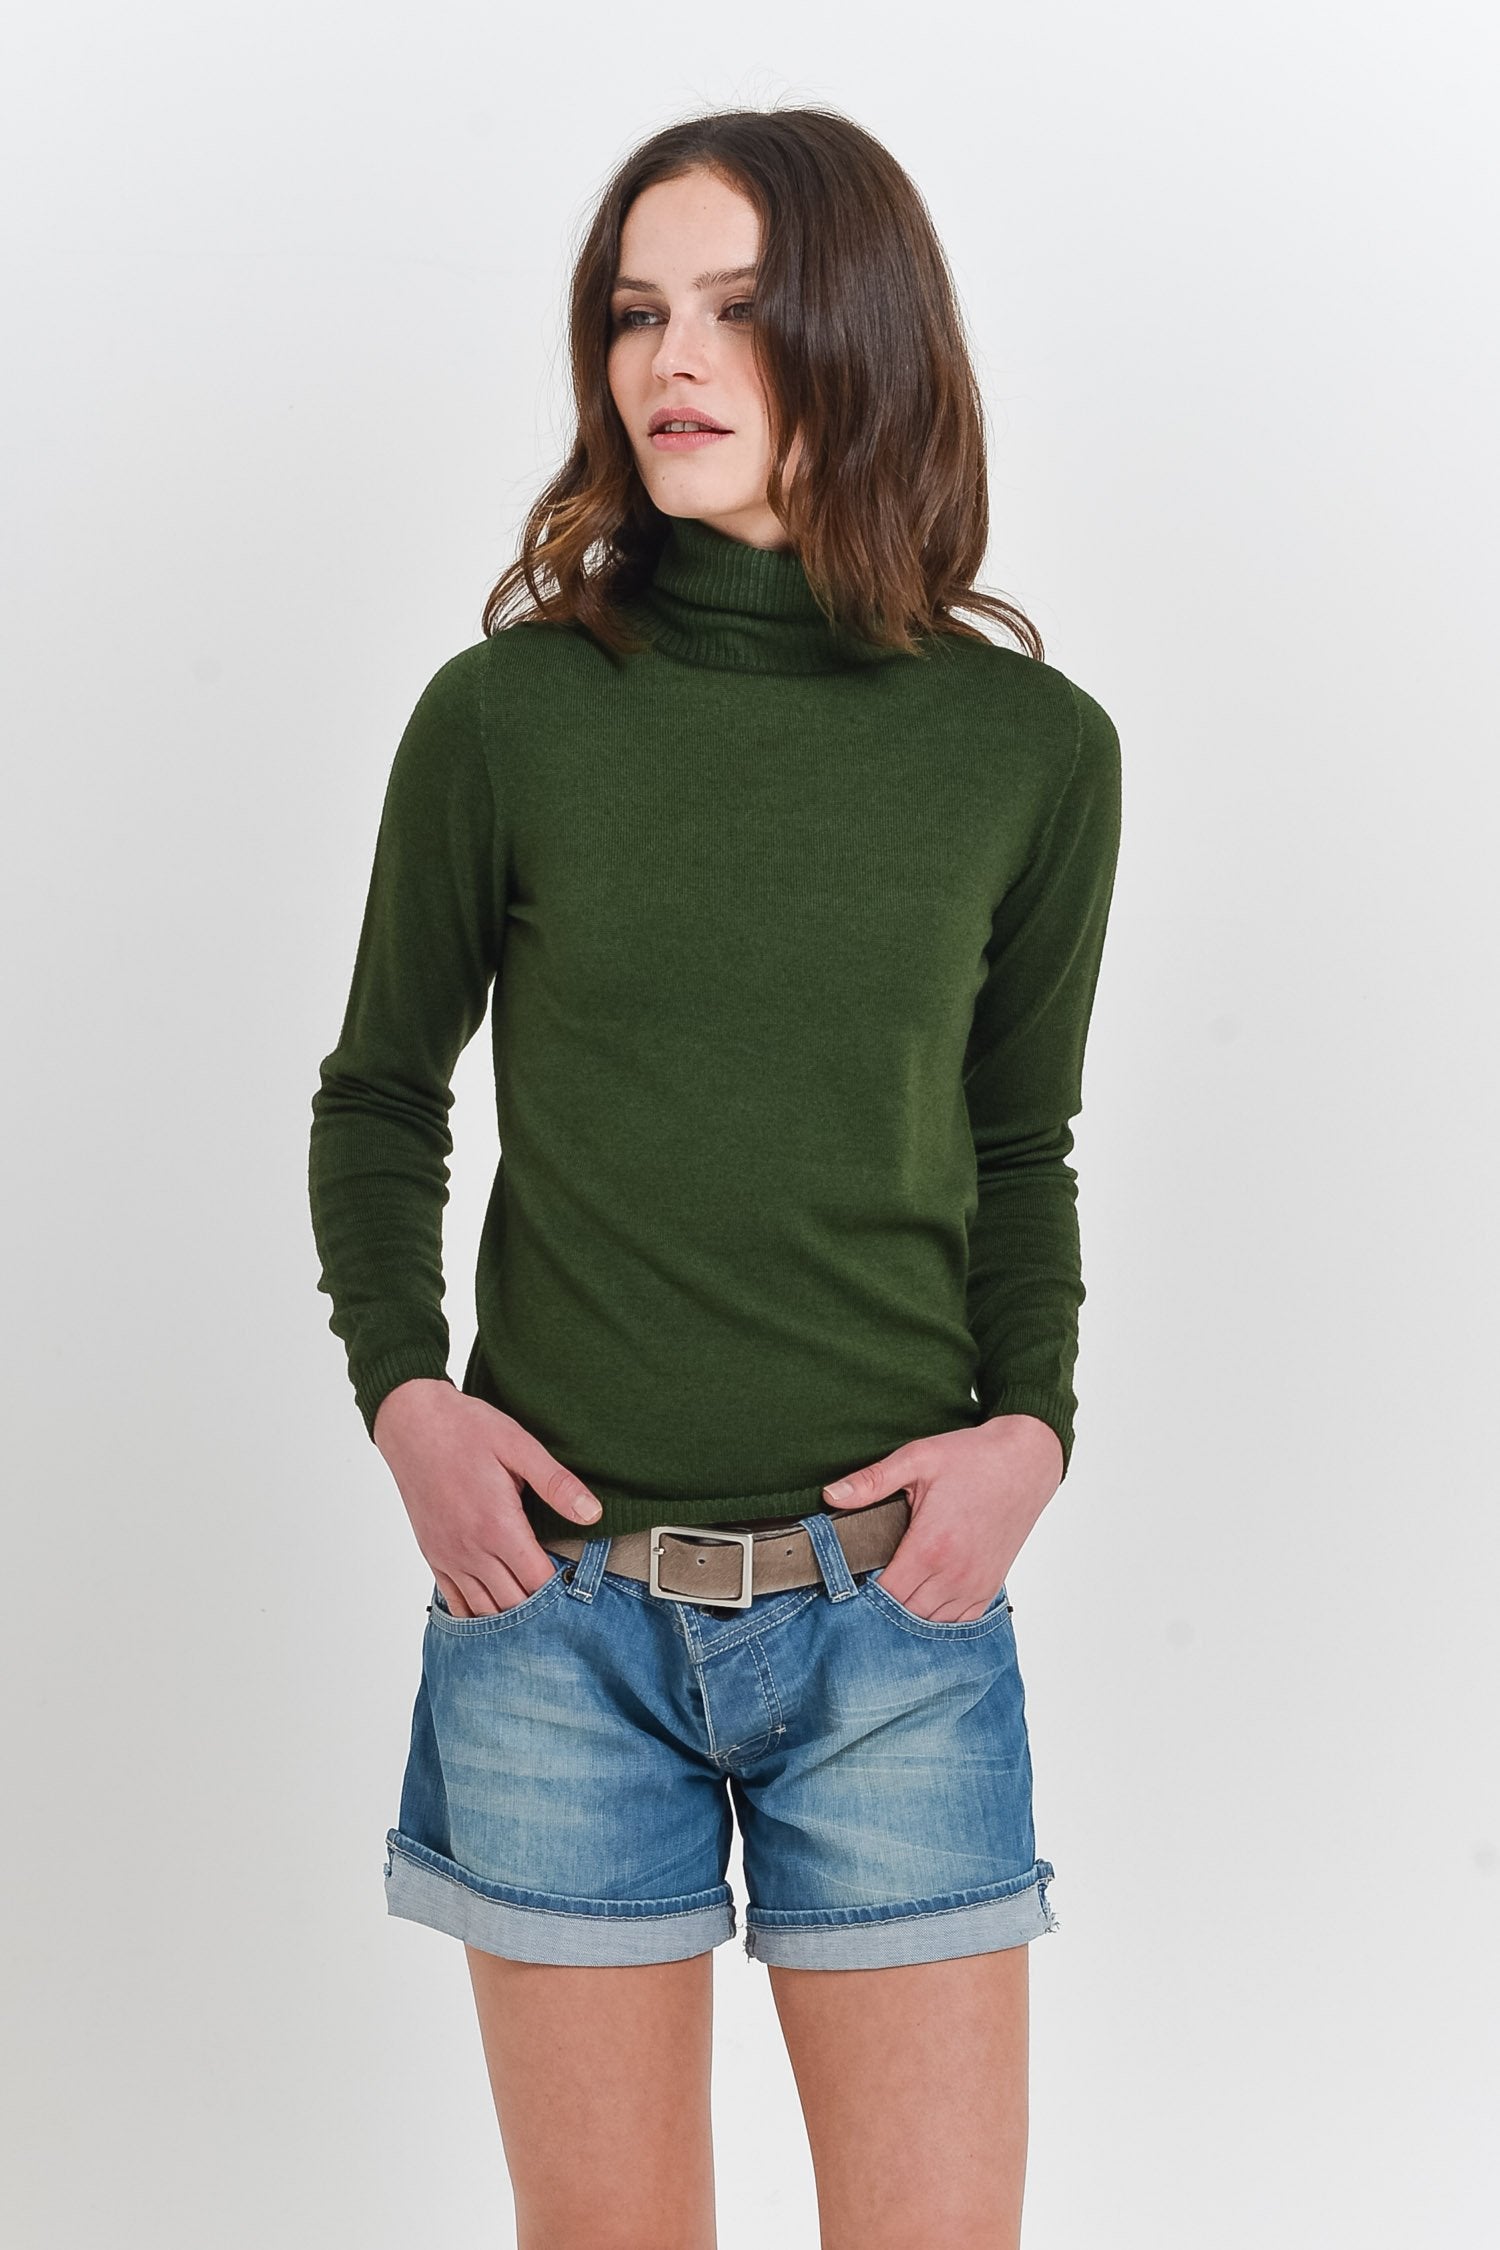 Totegan Army - Turtleneck Sweater - Sweaters